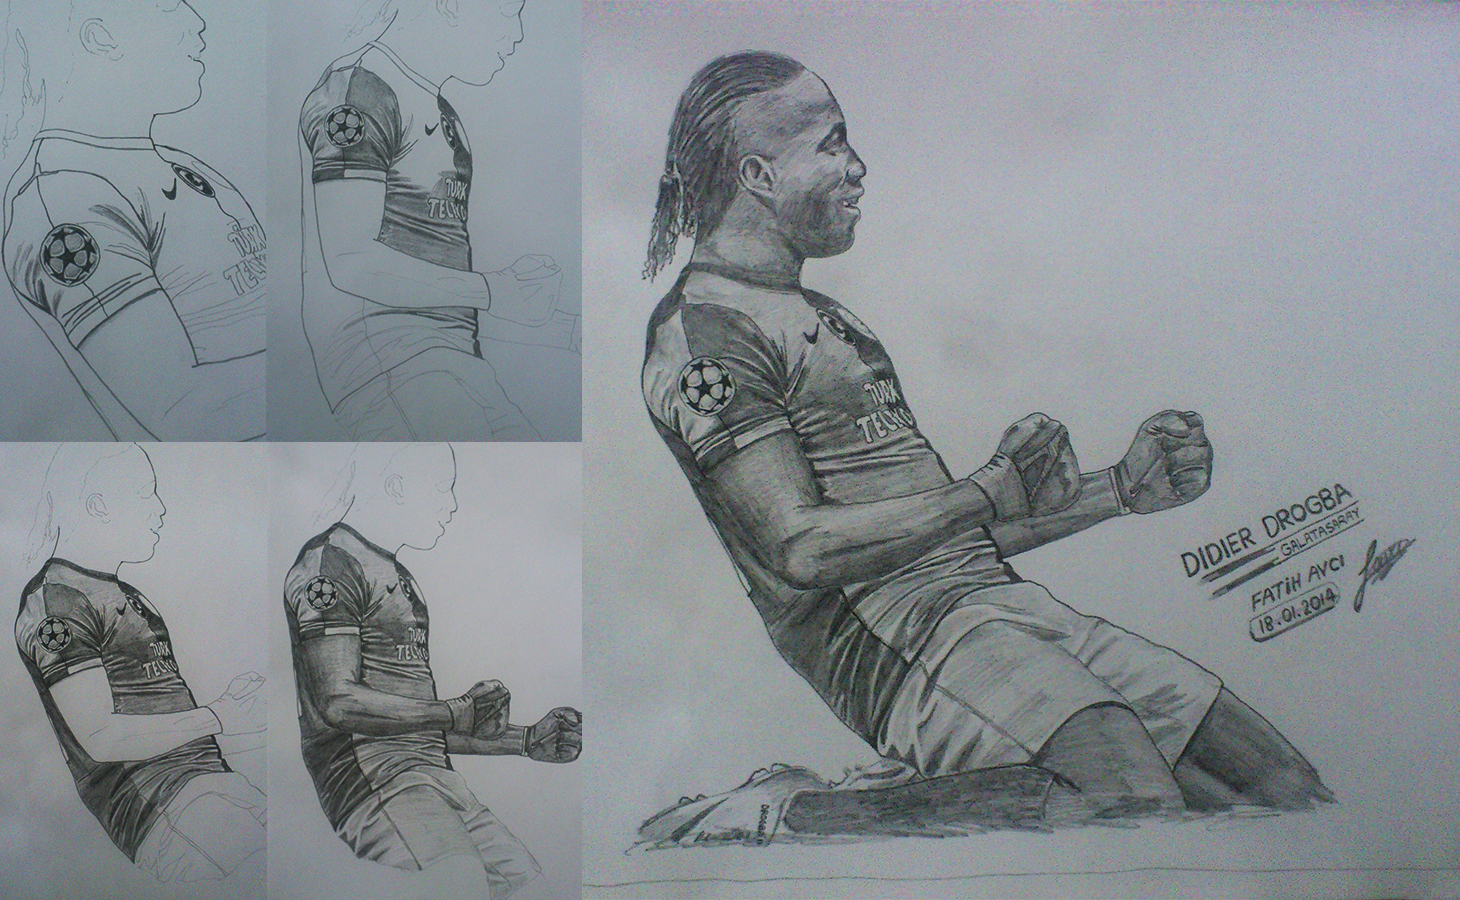 Didier Drogba drawing